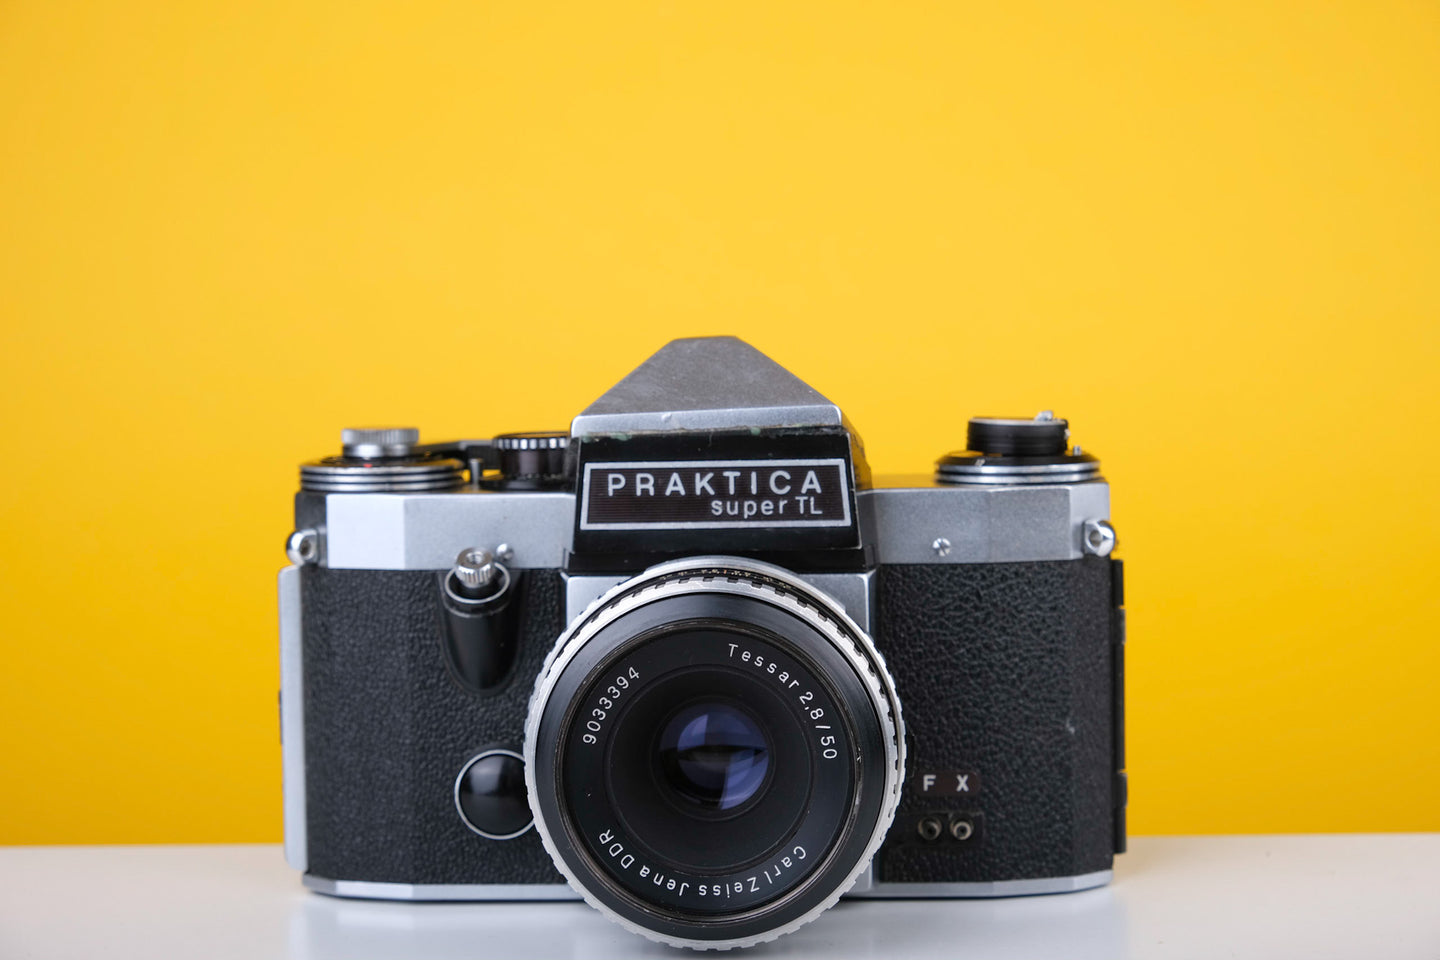 Praktica Super TL 35mm SLR Film Camera with Carl Zeiss 50mm f2.8